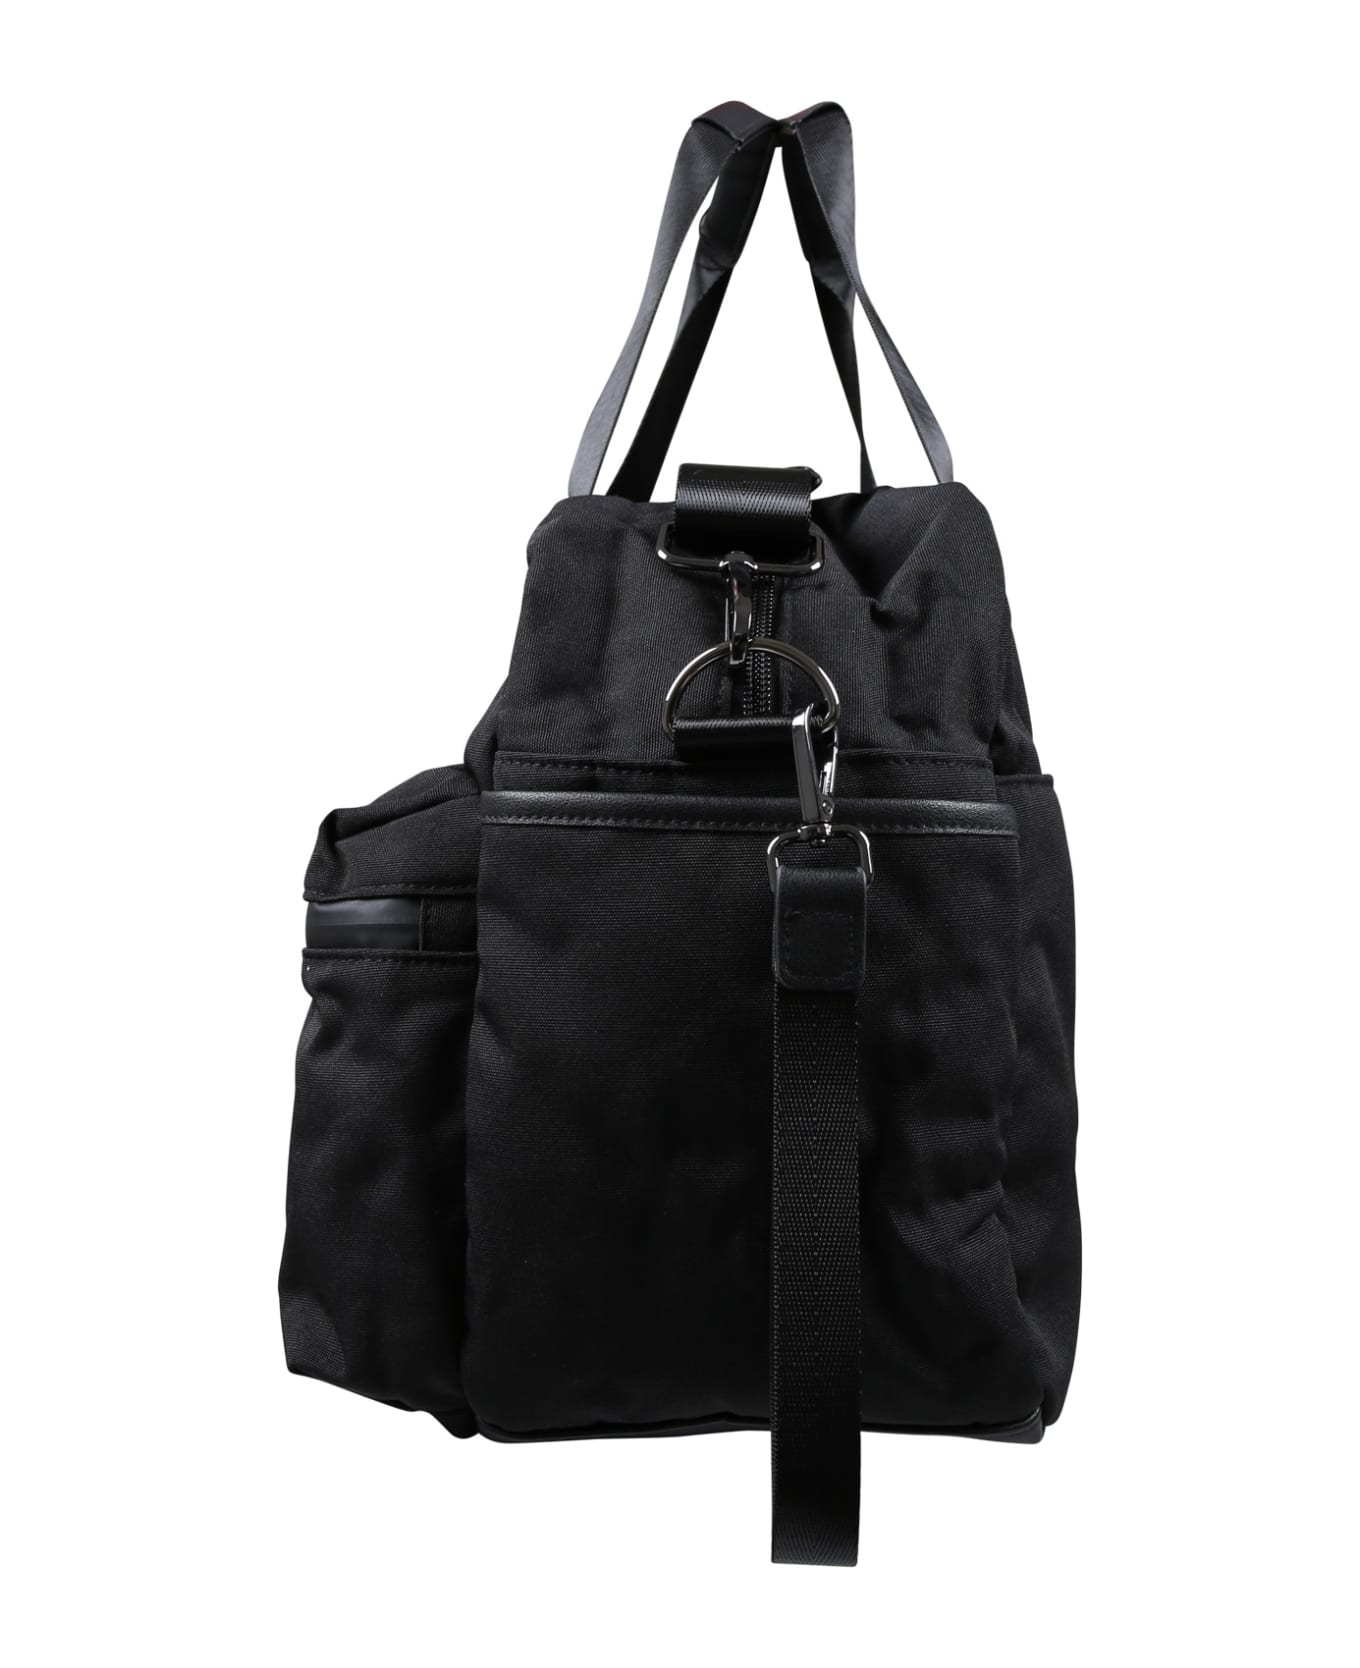 Hugo Boss Black Mom Bag For Baby Boy With Logo - Black